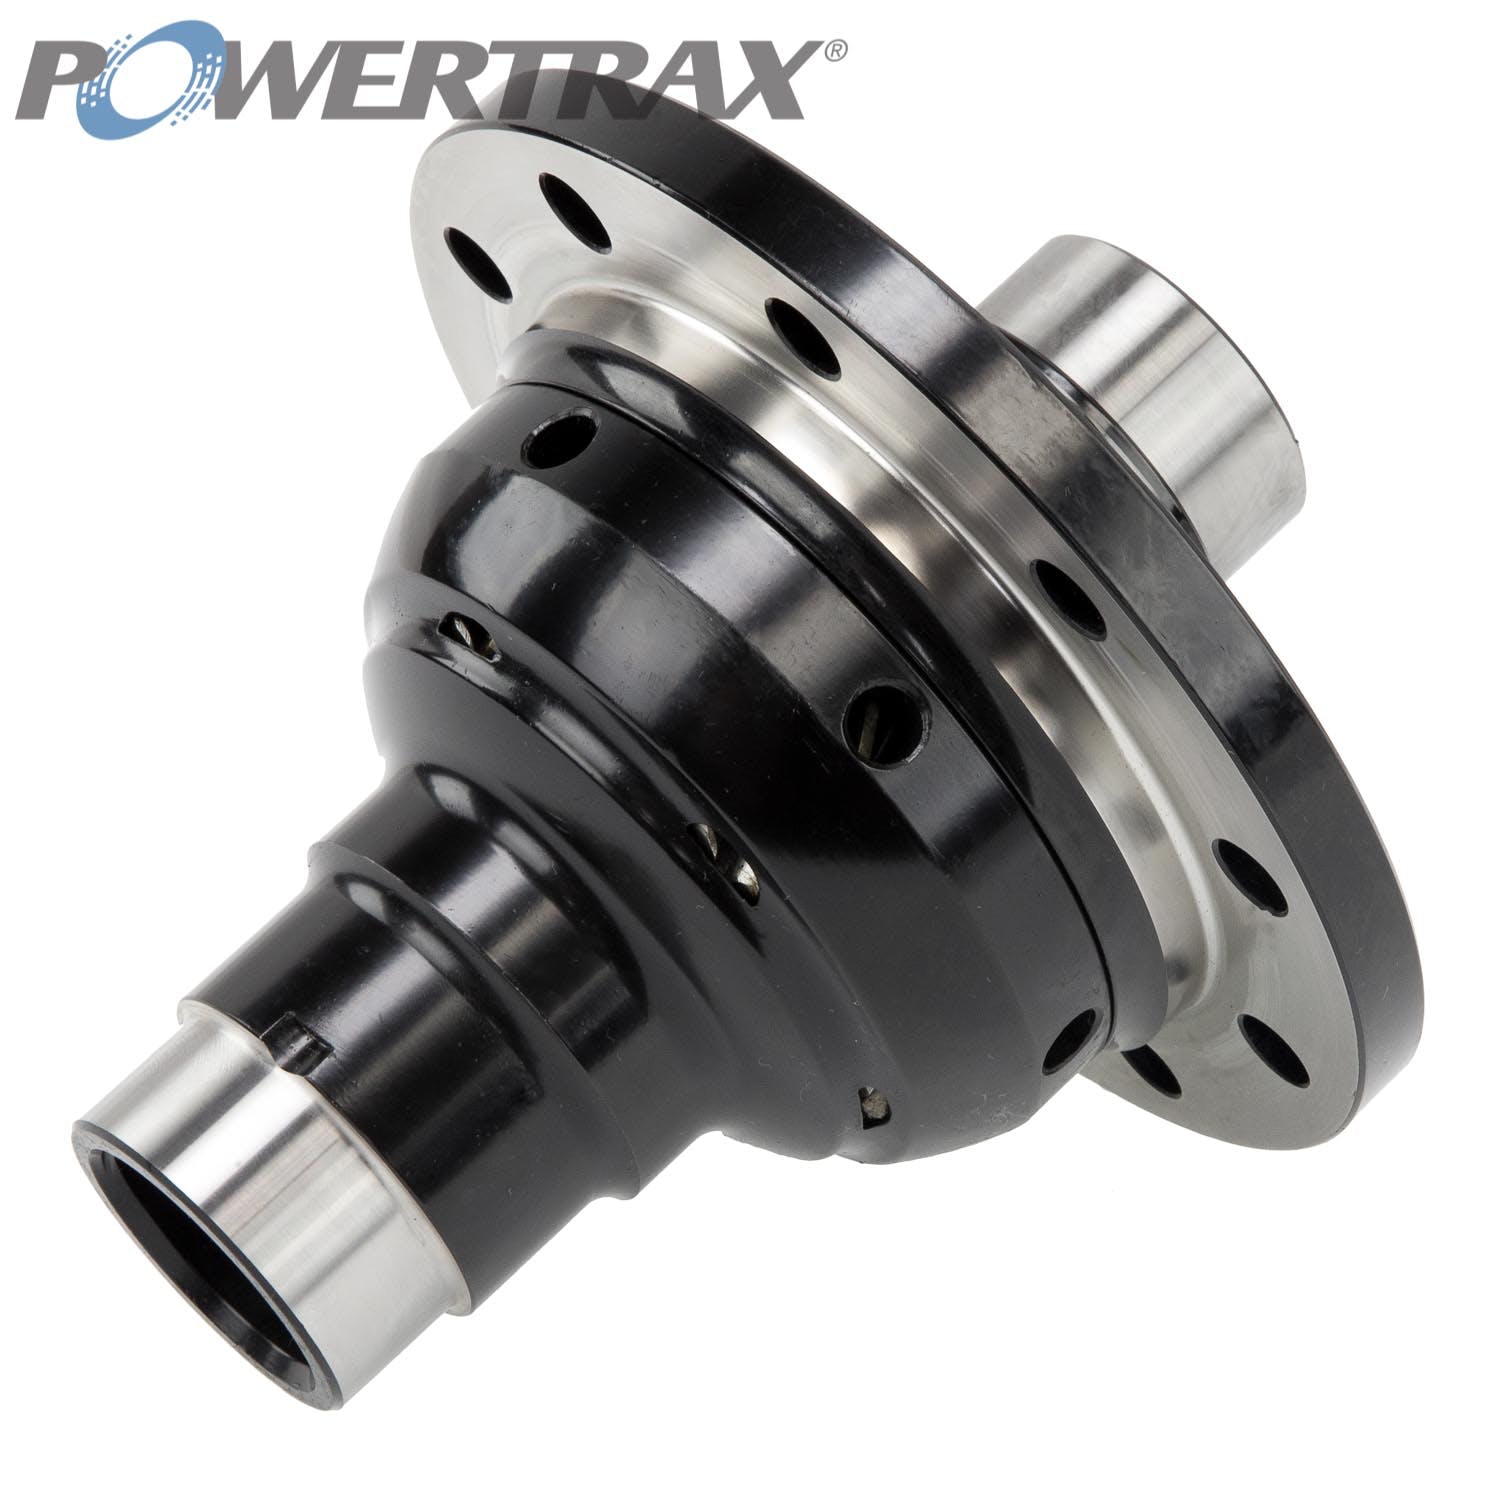 PowerTrax GT109035 Powertrax - Grip PRO Traction System